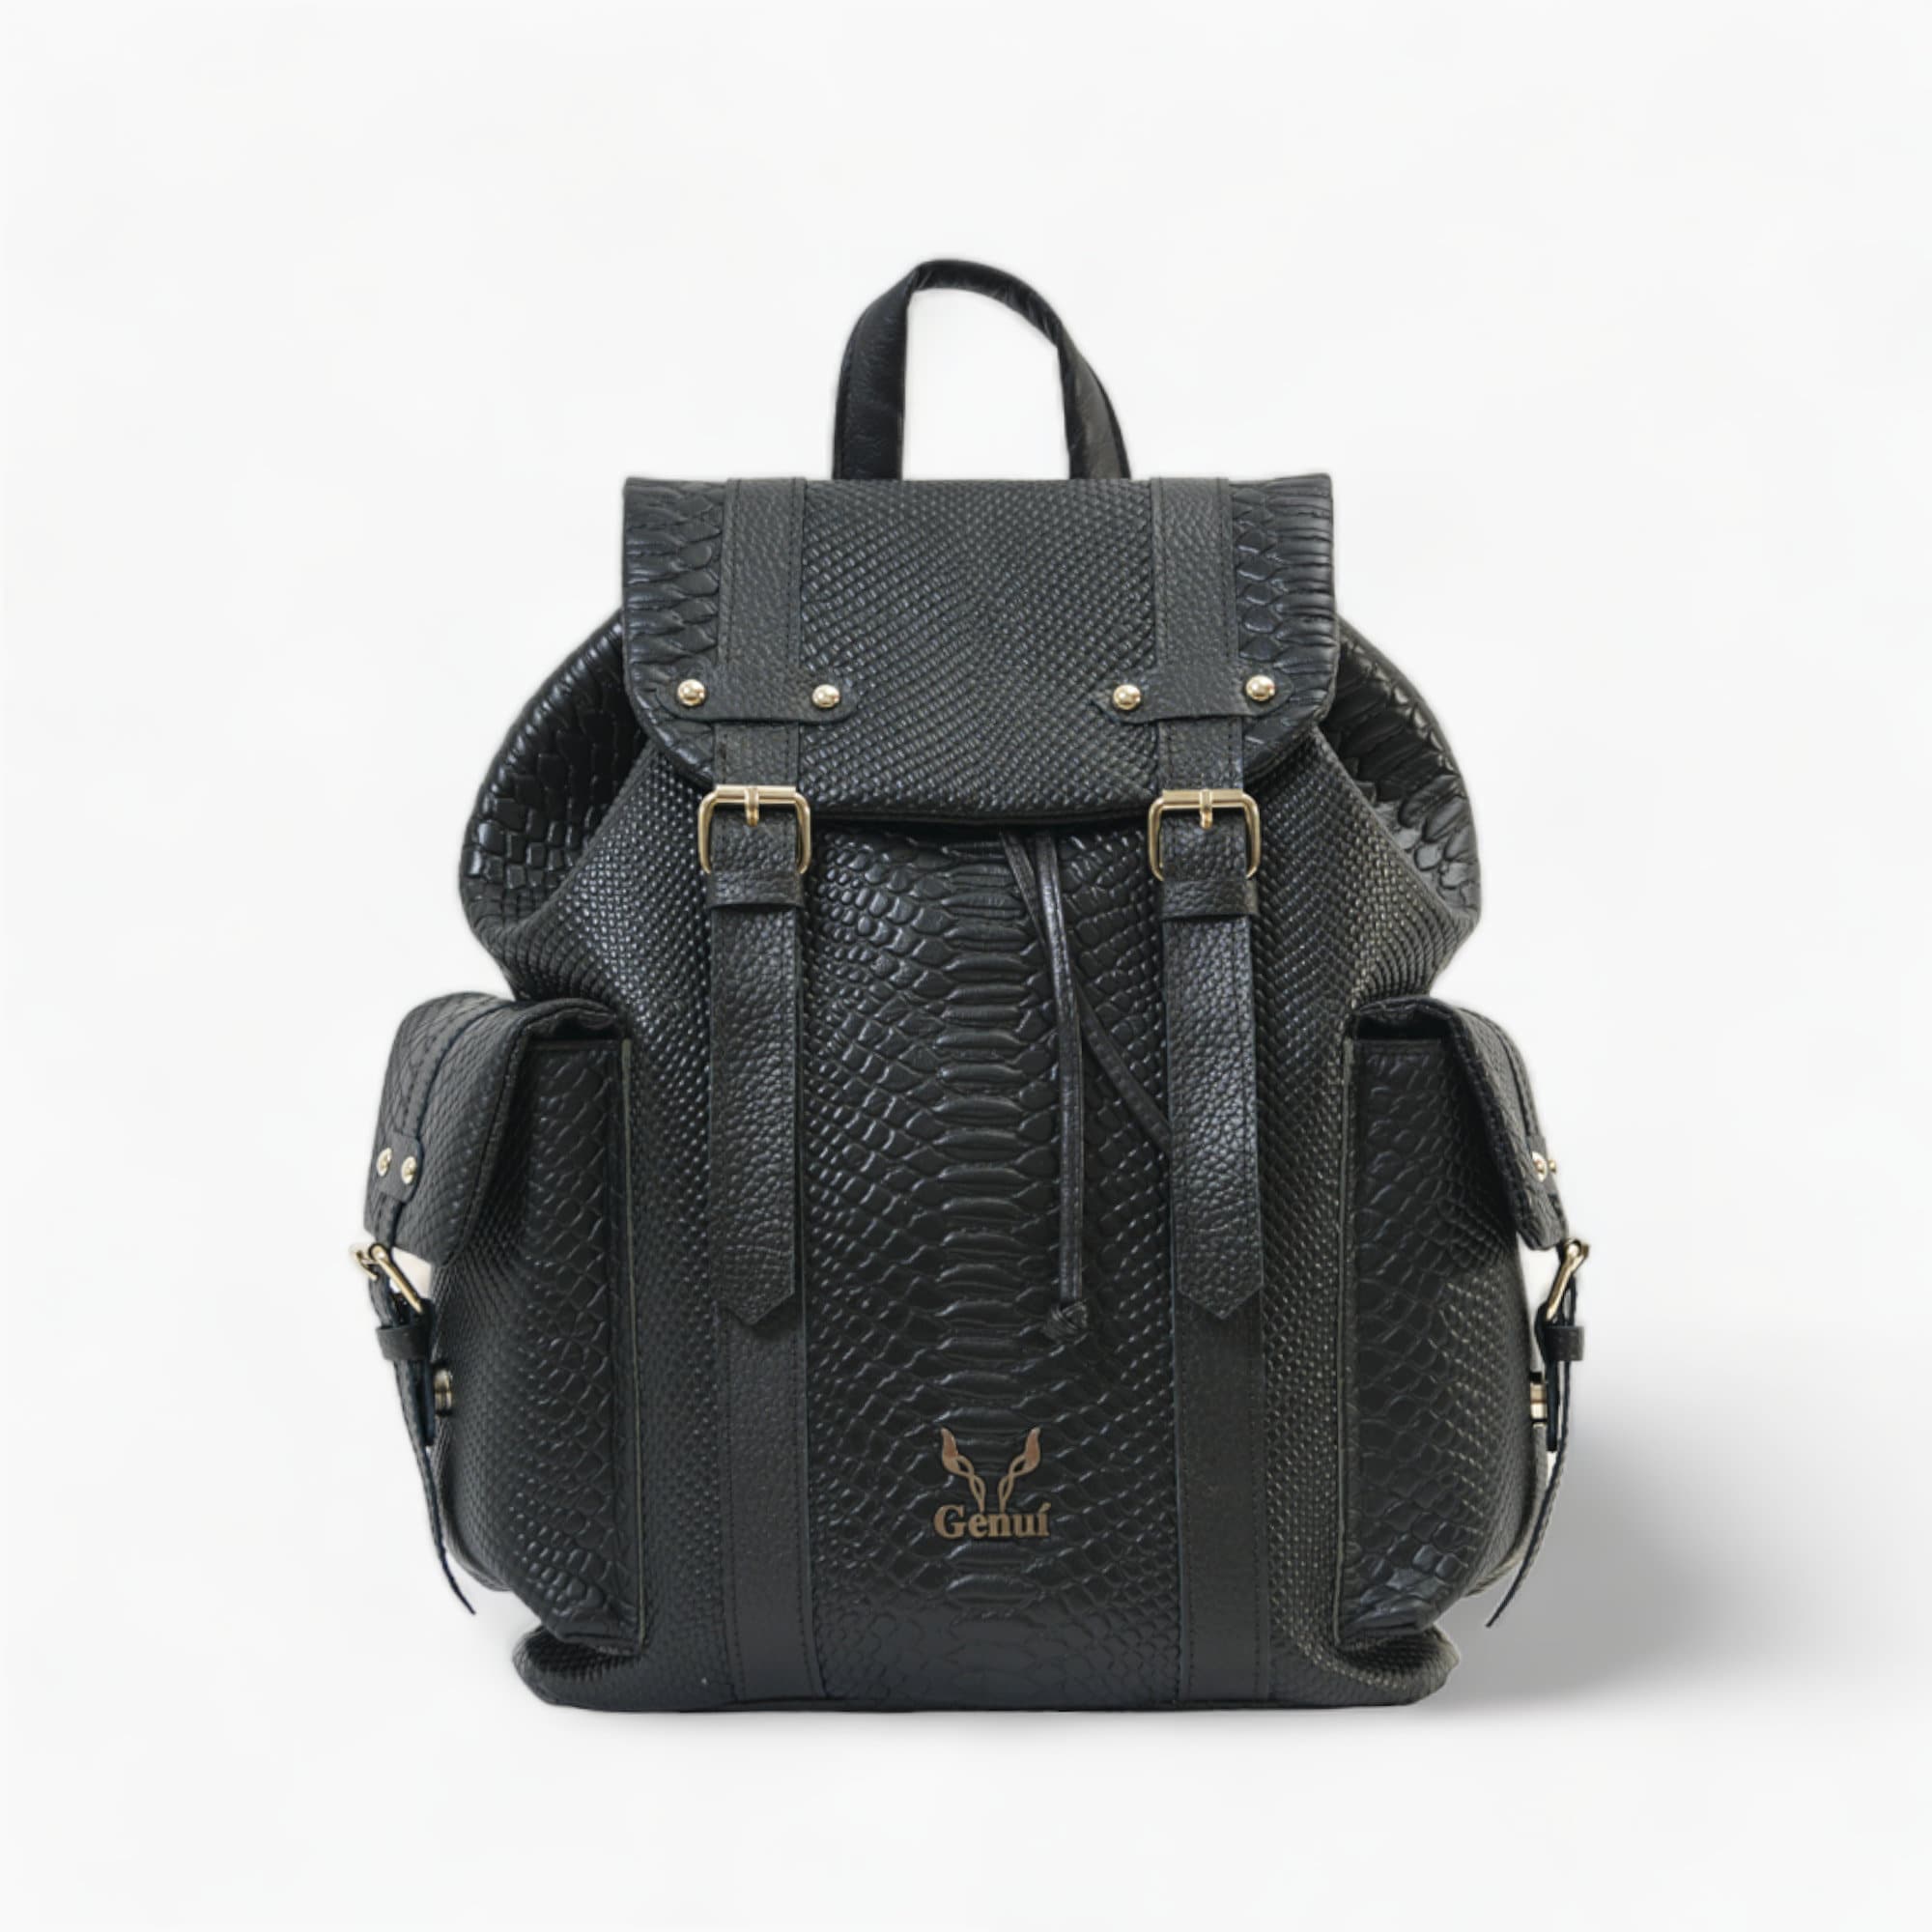 Christopher PM Backpack, Louis Vuitton - Designer Exchange